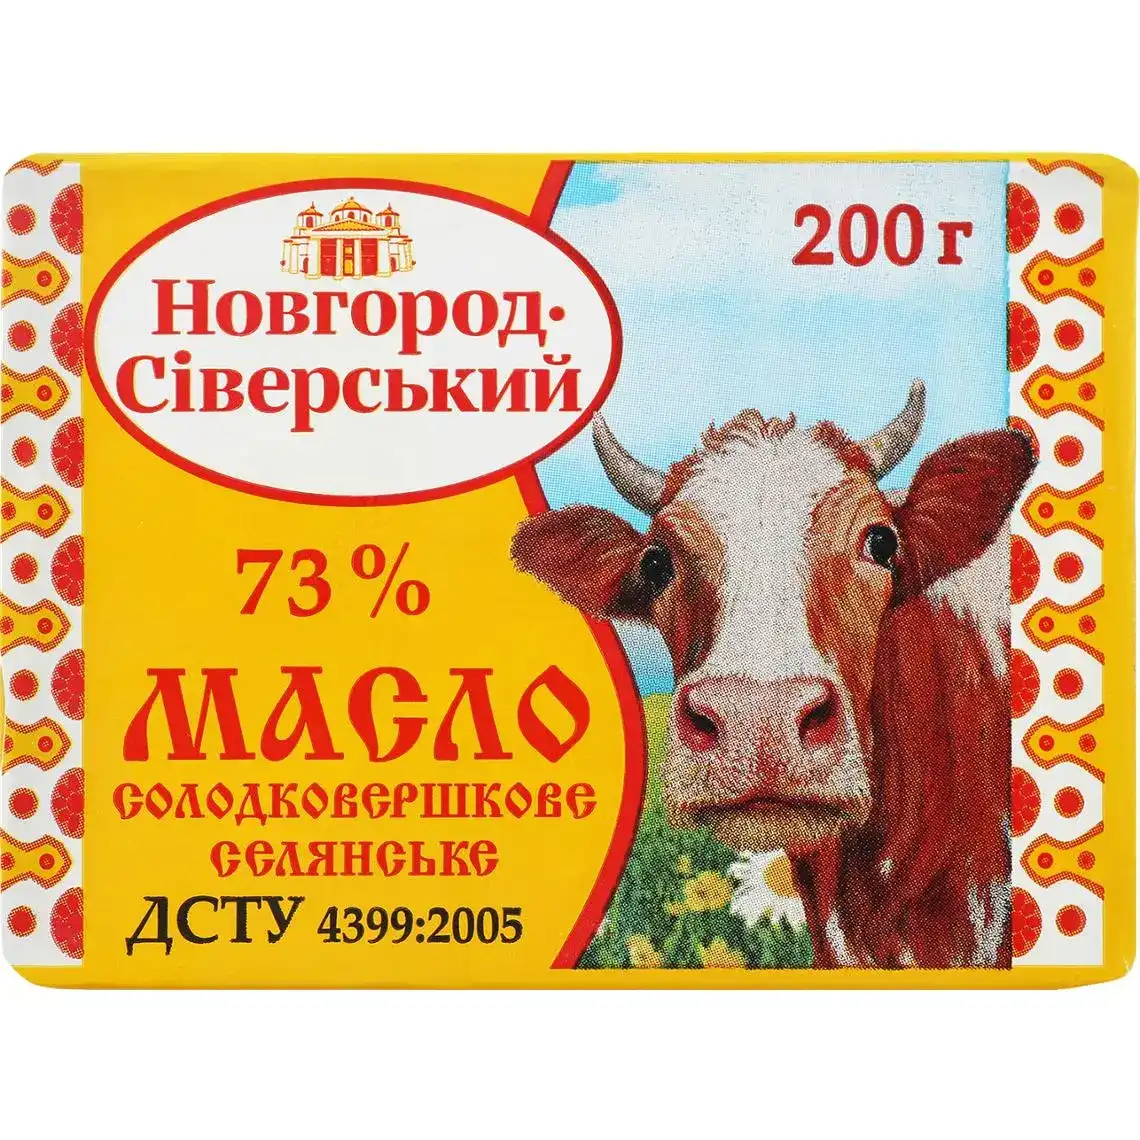 Масло Новгород-Сіверський солодковершкове селянське 73% 200 г